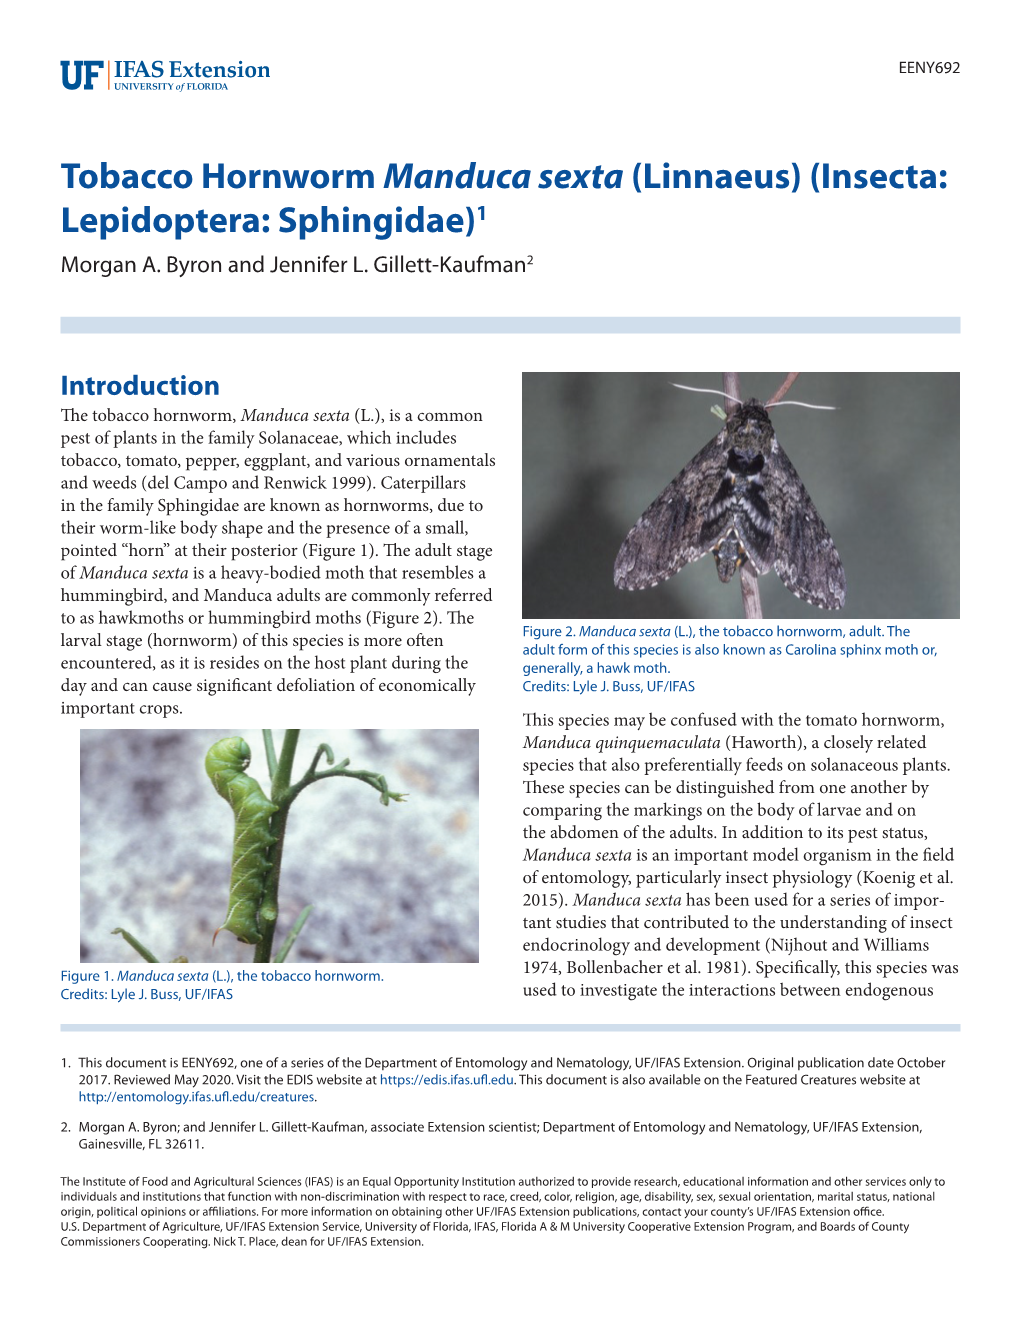 Tobacco Hornworm Manduca Sexta (Linnaeus) (Insecta: Lepidoptera: Sphingidae)1 Morgan A